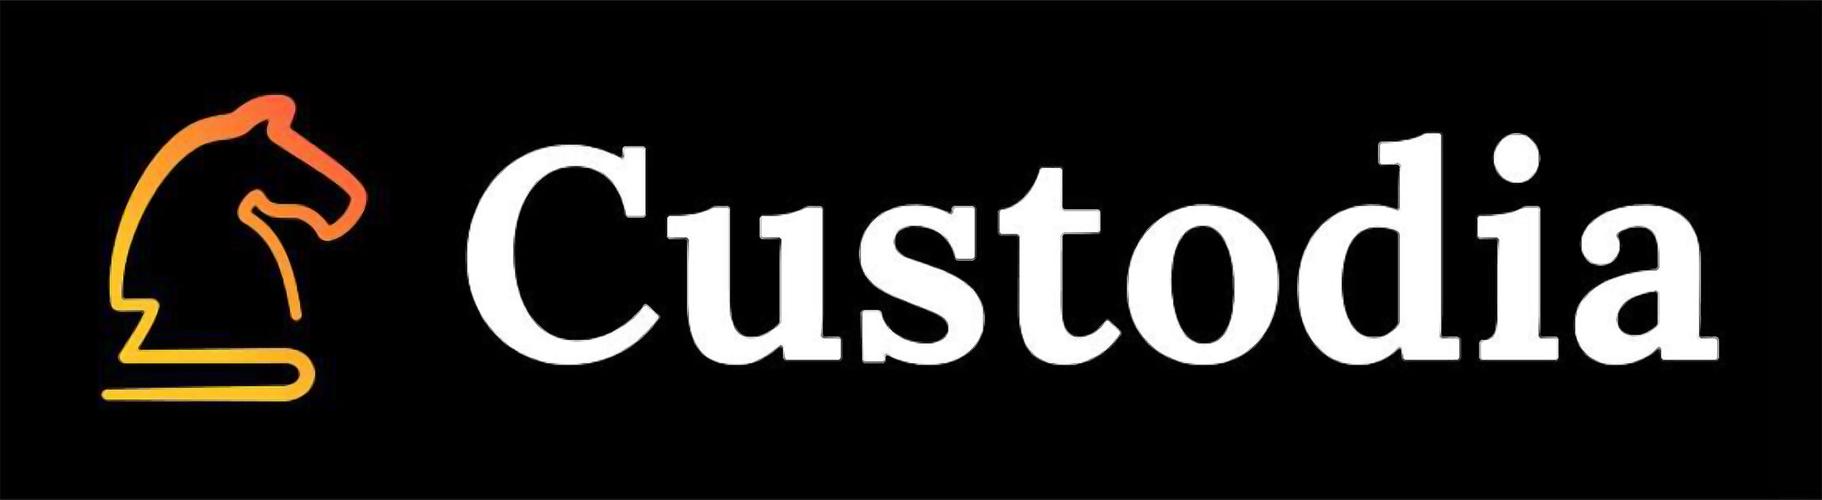 Custodia Bank logo